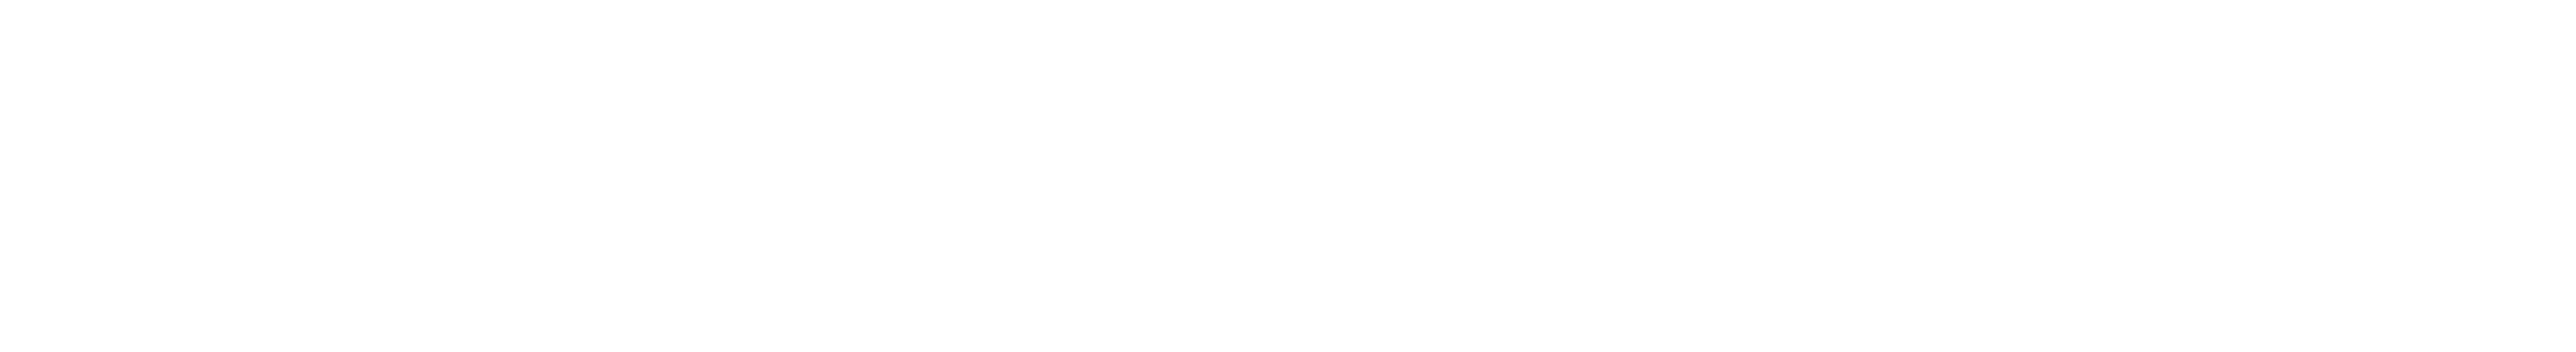 logo alpha dental 1